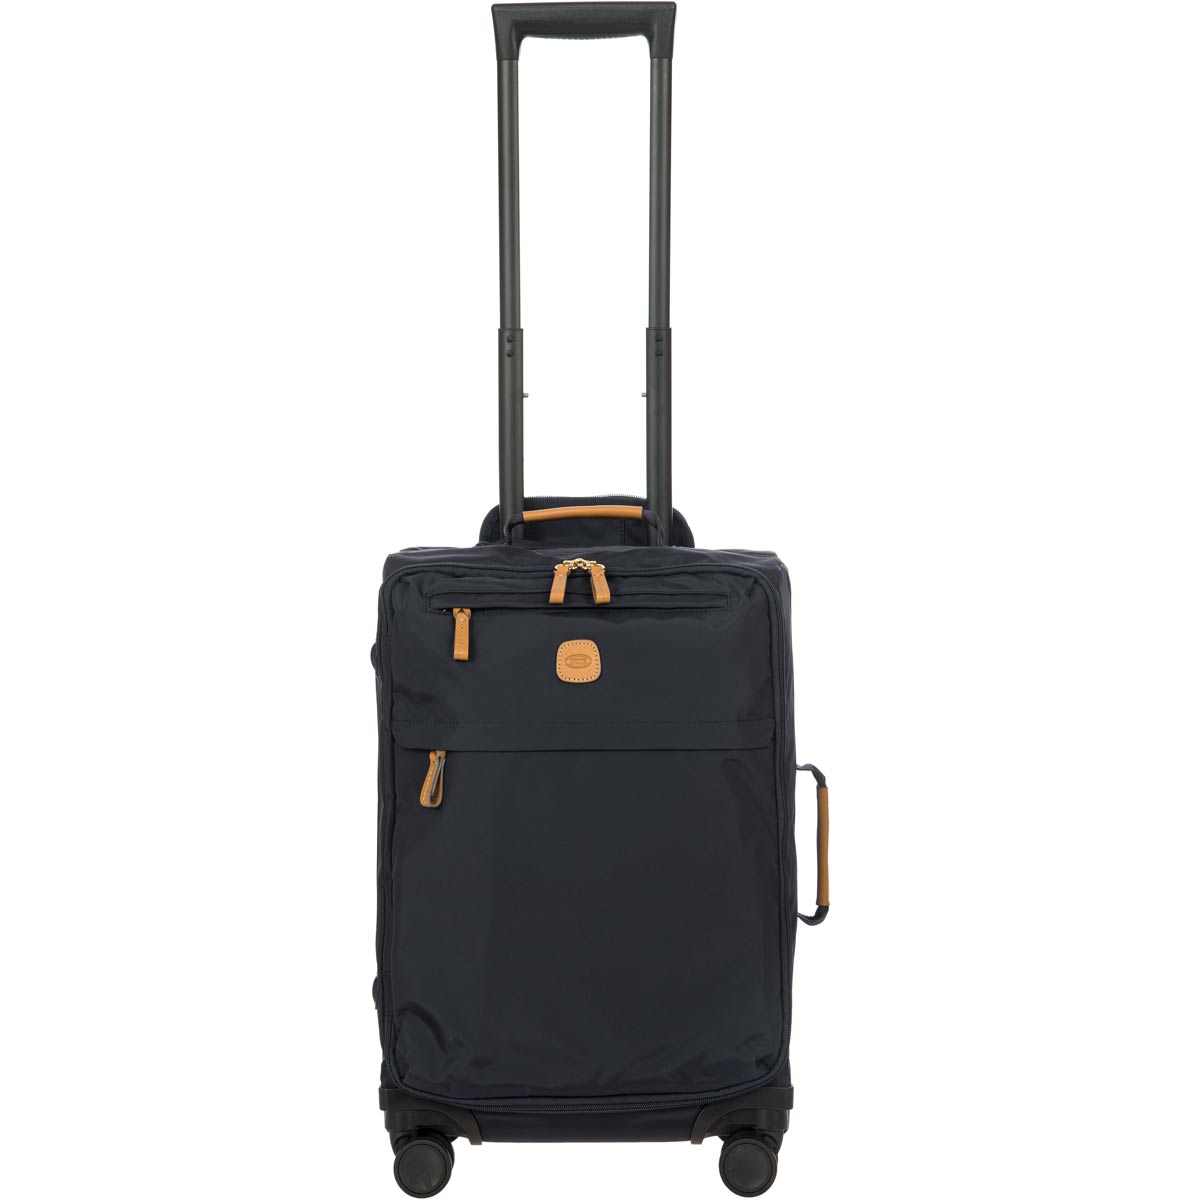 VÄRLDENS Carry-on bag with wheels, black, 13 ½x7 ¾x21 ¼/1014 oz - IKEA